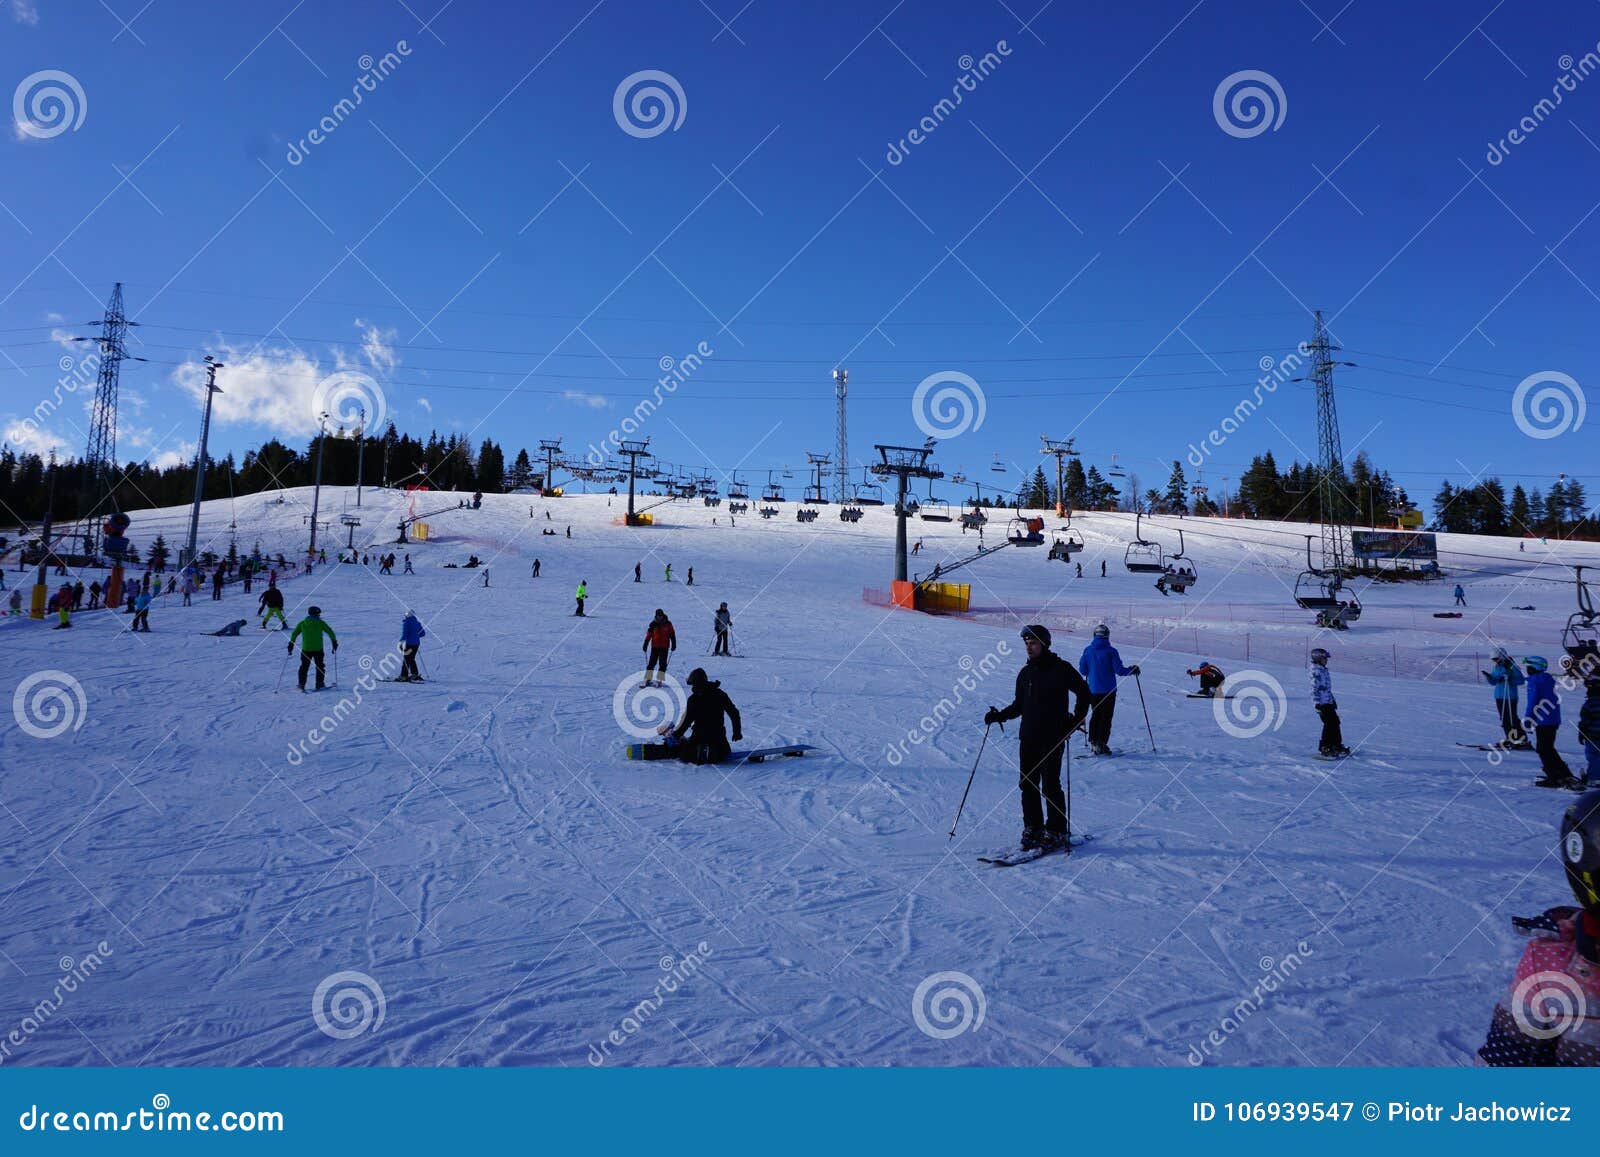 Ski Resort Bania in Bialka Tatrzanska Poland Editorial Photography ...